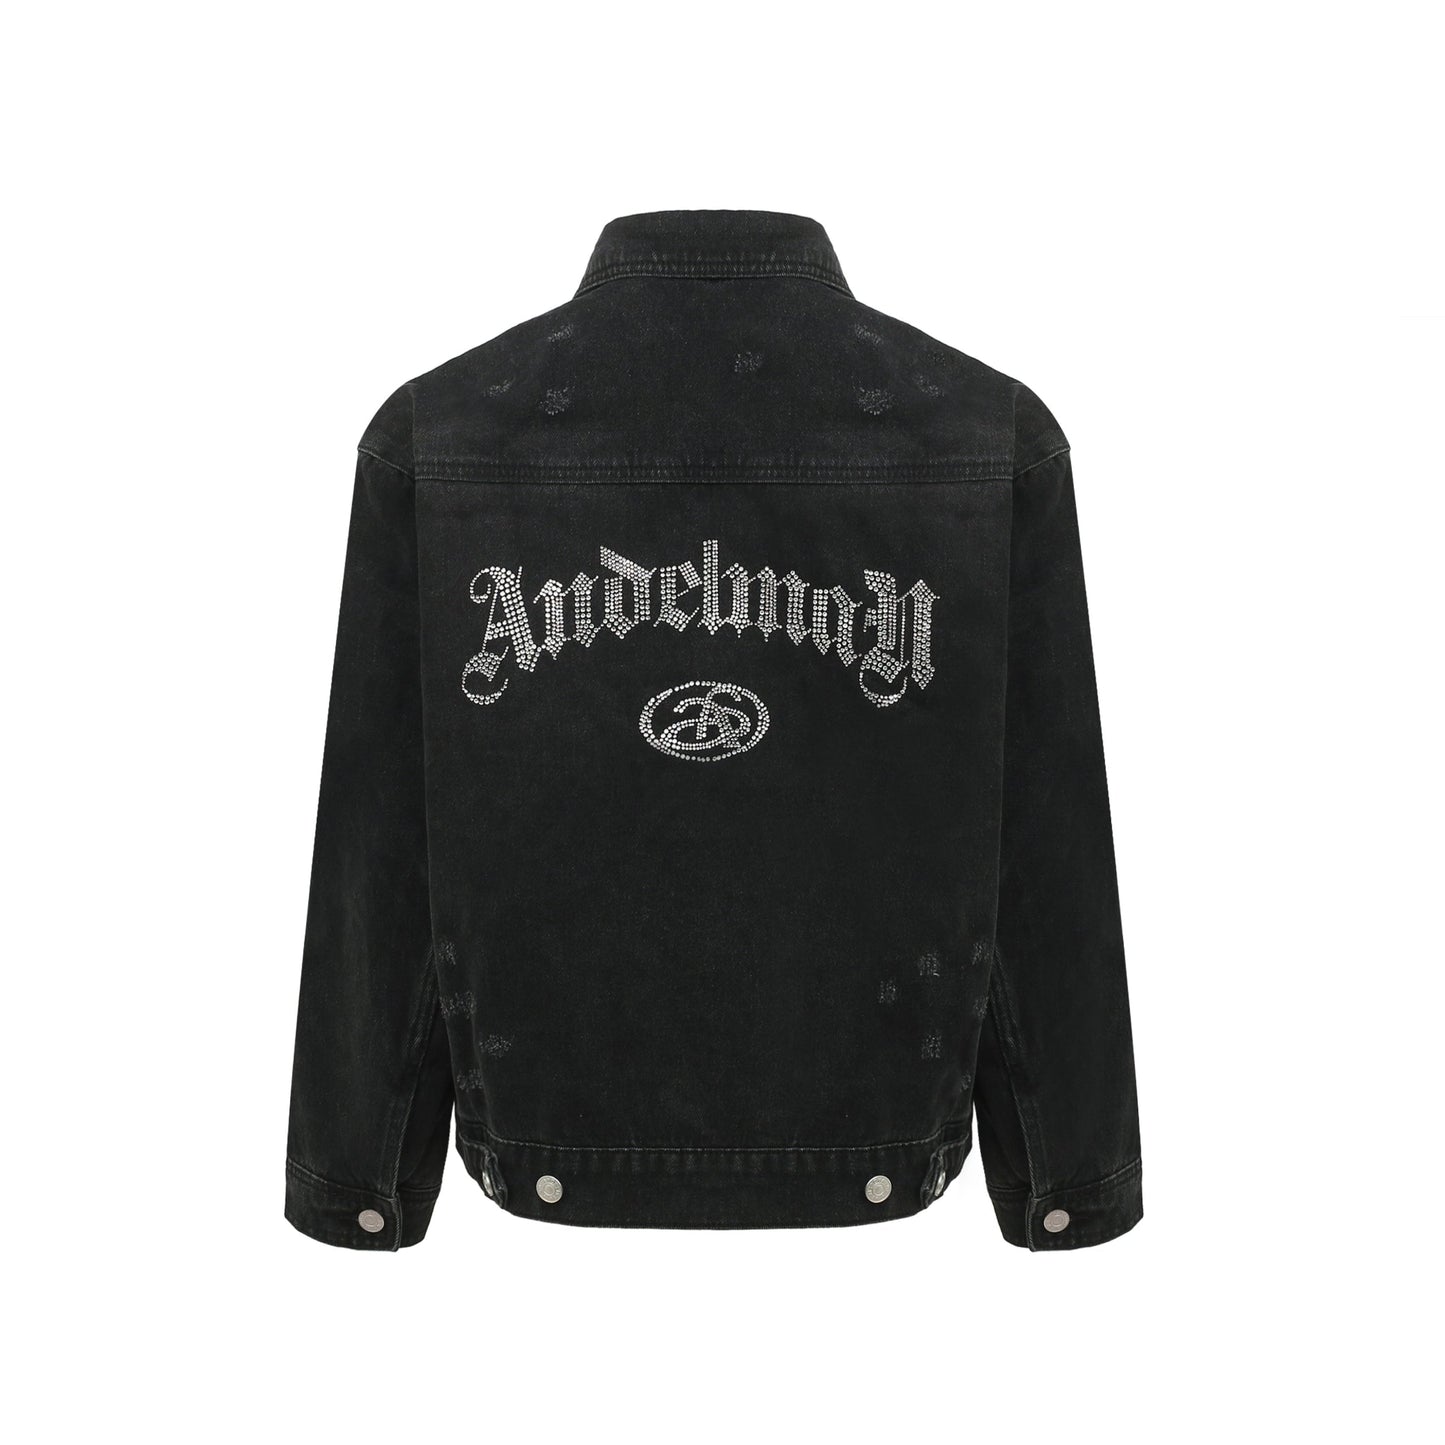 Ann Andelman Black Denim Diamante Embellished Jacket